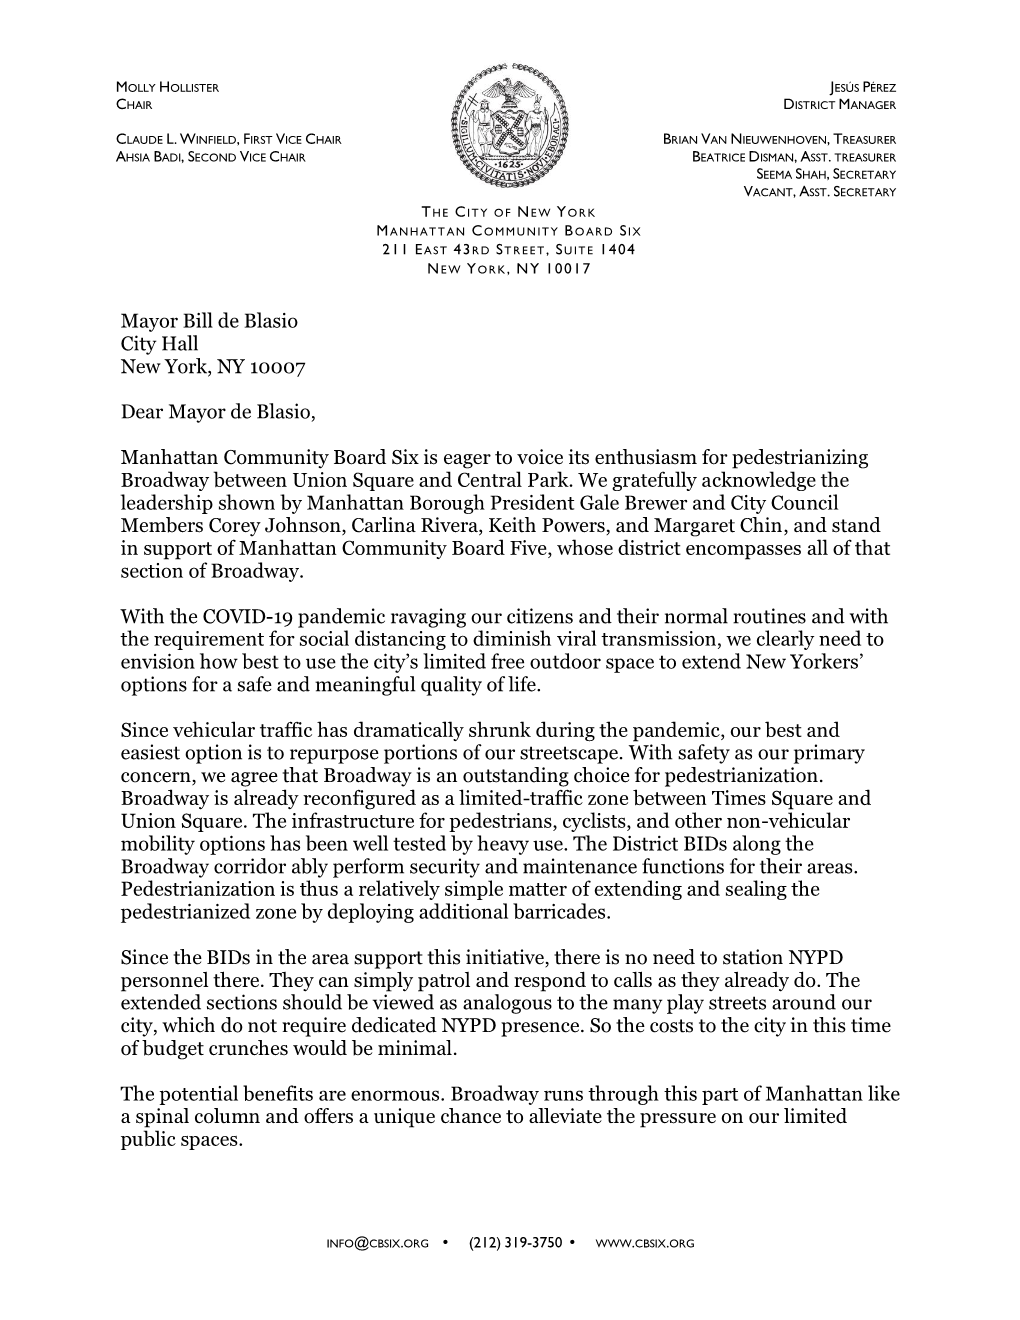 Letter to Mayor Bill De Blasio Sent in April